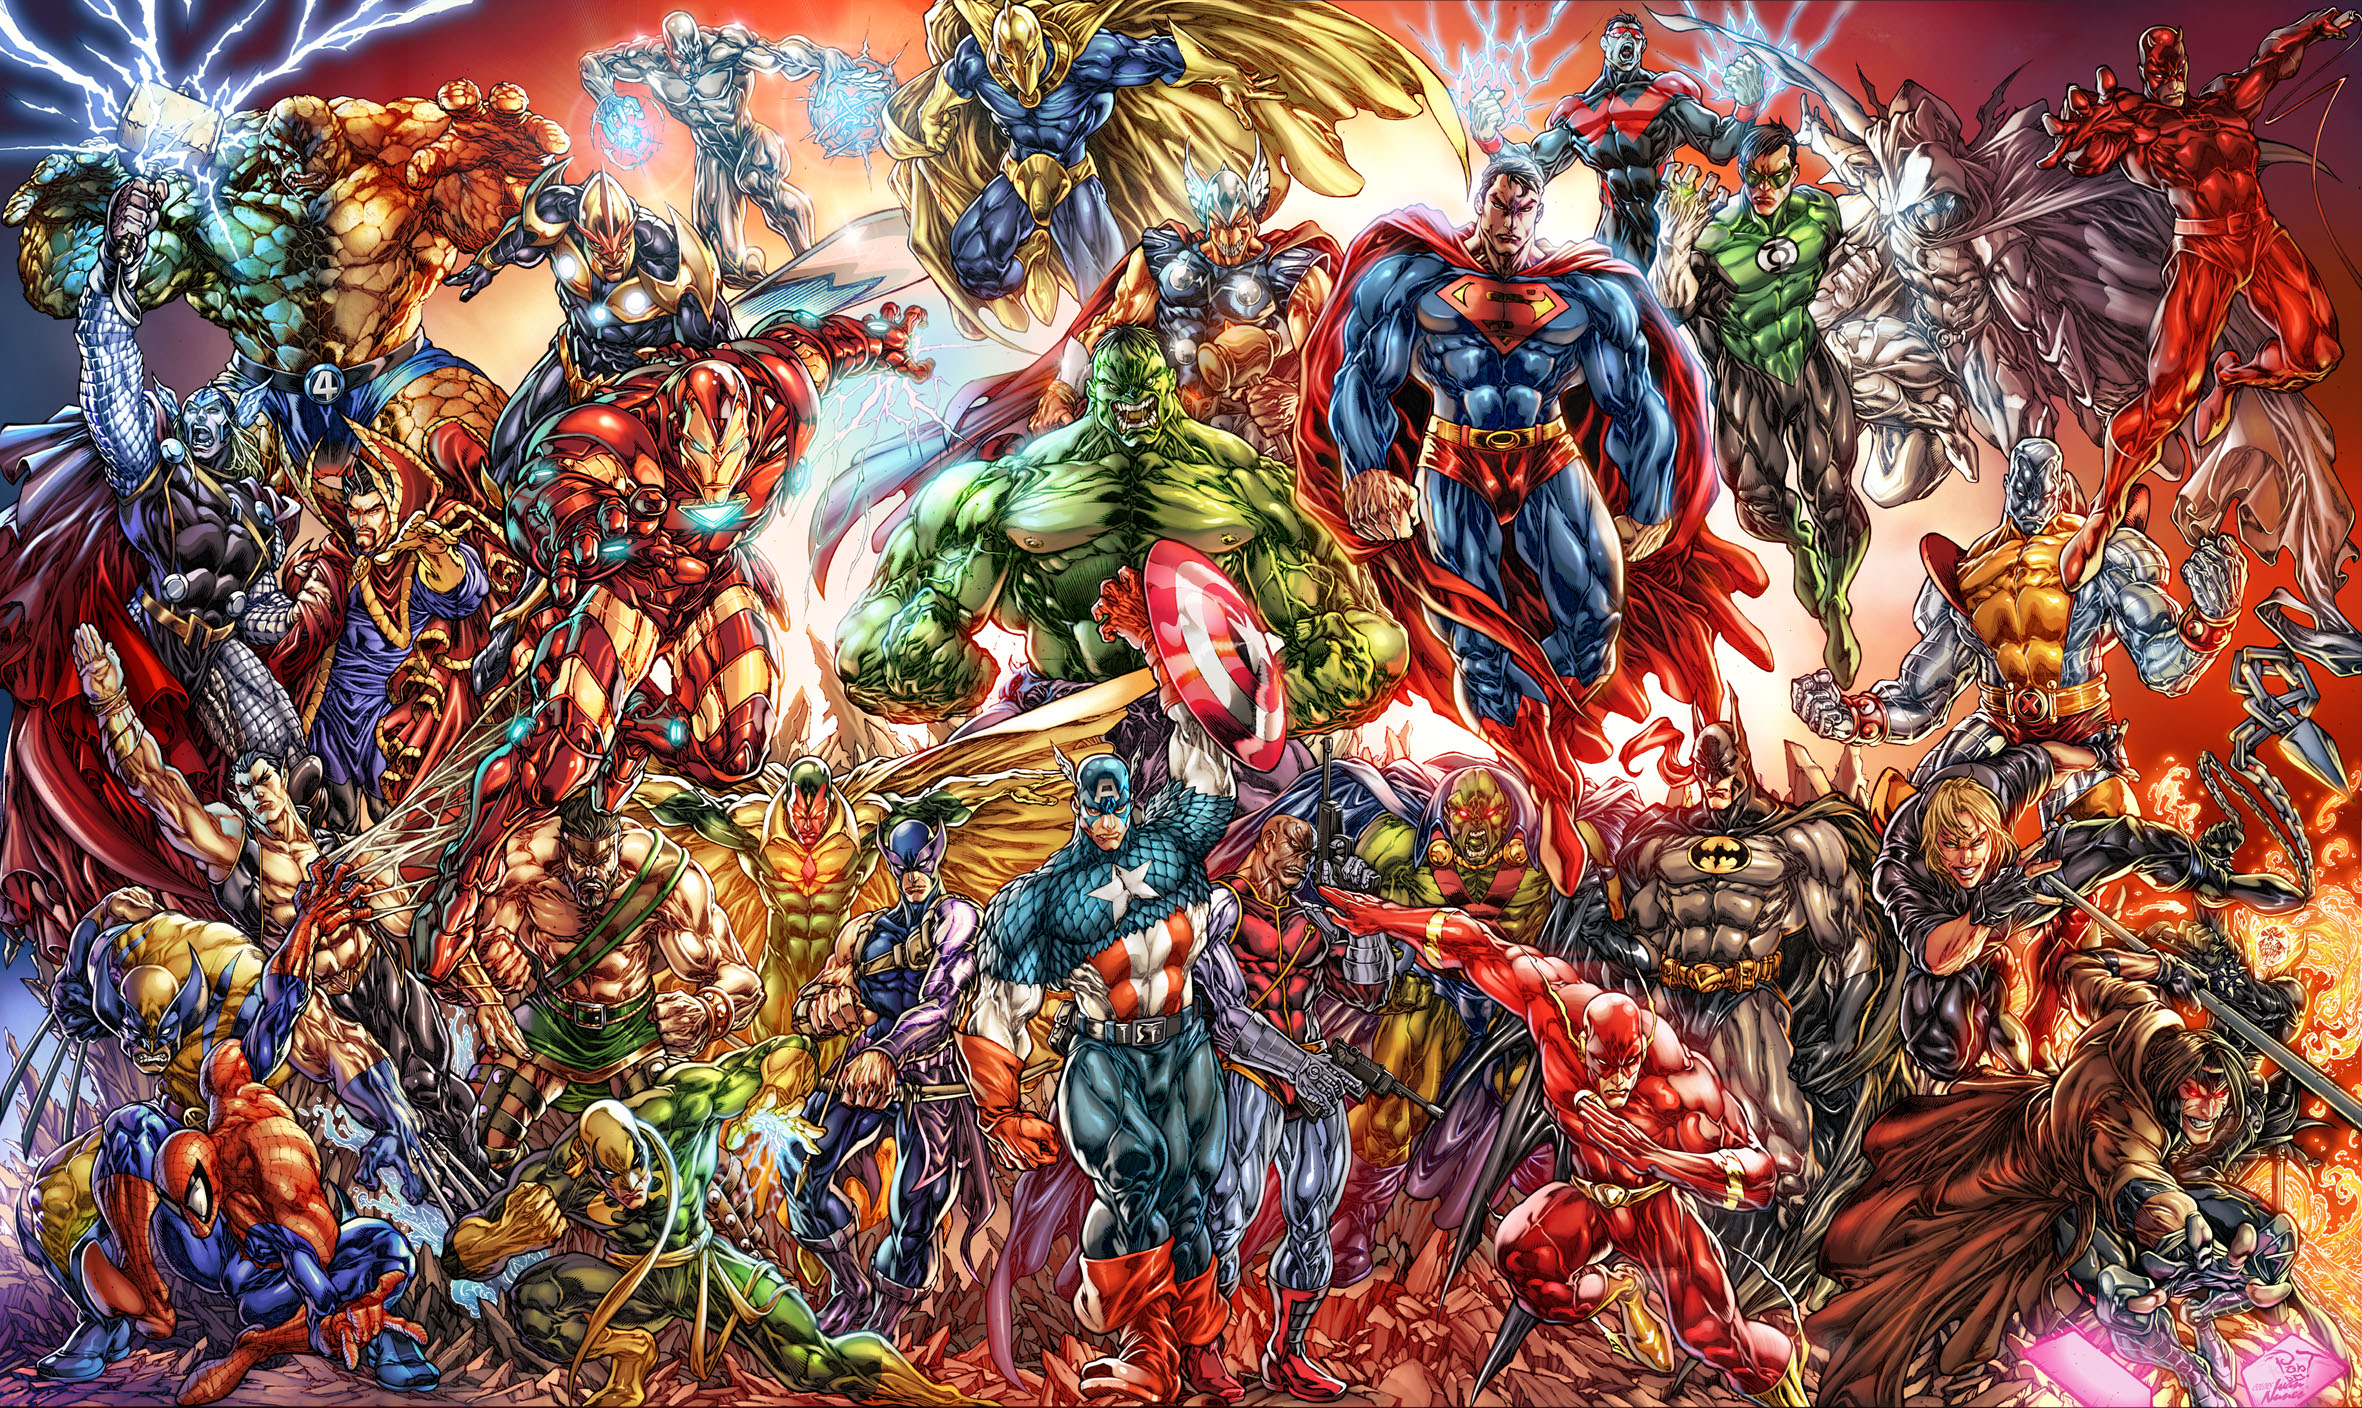 hal jordan, superman, martian manhunter, batman, spider man, daredevil, dc comics, hulk, comics, collage, barry allen, wolverine, ghost rider, ben grimm, beta ray bill, captain america, clint barton, colossus, danny rand, deathlok, doctor fate (dc comics), doctor strange, flash, gambit (marvel comics), green lantern, hawkeye, hercules (marvel comics), iron fist (marvel comics), iron man, j'onn j'onzz, longshot (marvel comics), moon knight, namor the sub mariner, nightwing, nova (marvel comics), peter parker, silver surfer, sub mariner, thing (marvel comics), thor, vision (marvel comics), wonder man 5K